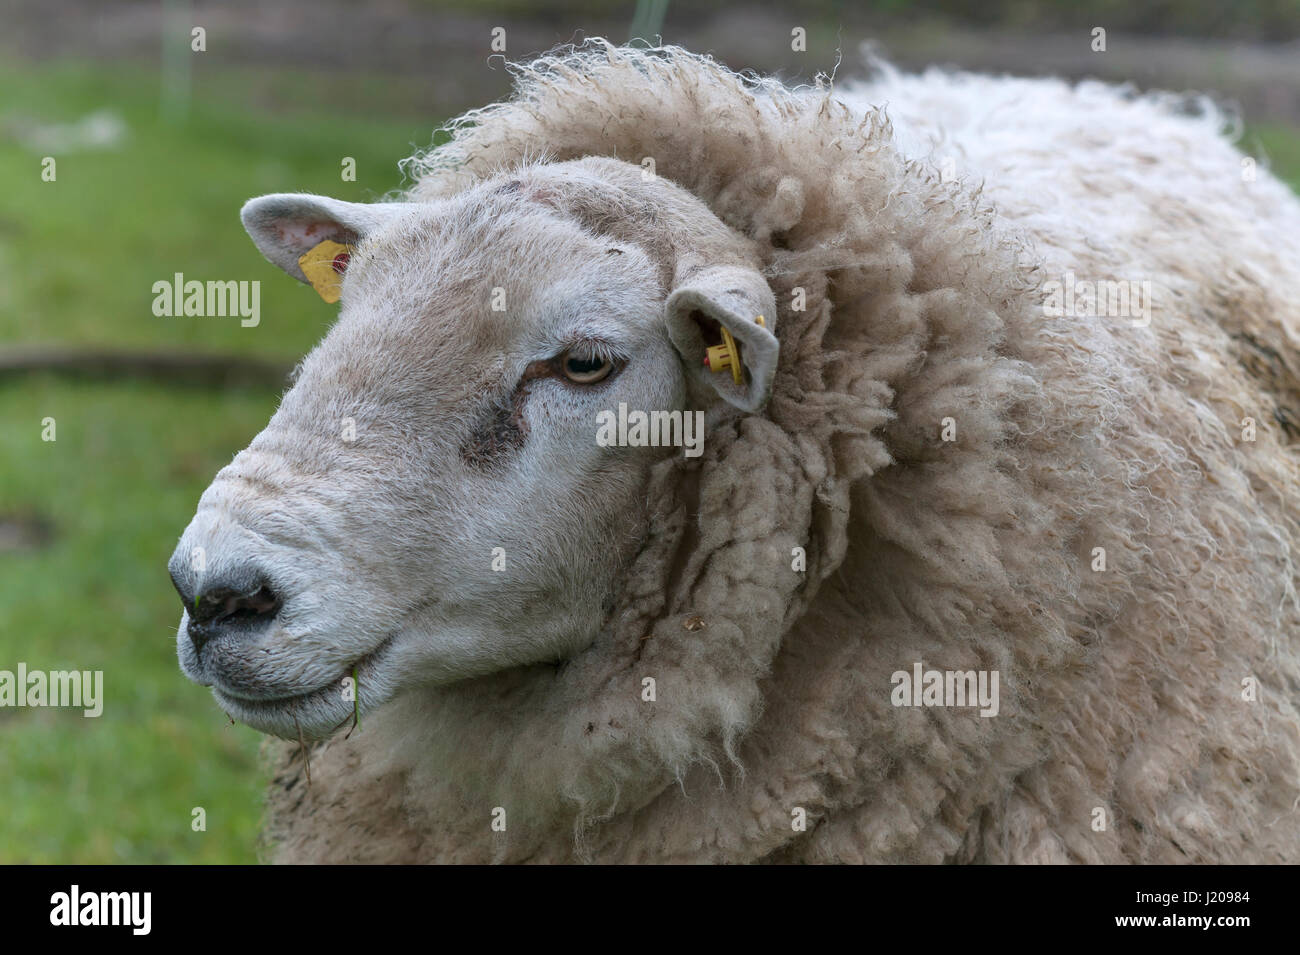 Texel sheep, Breed, portrait, Mecklenburg-Western Pomerania, Germany Stock Photo